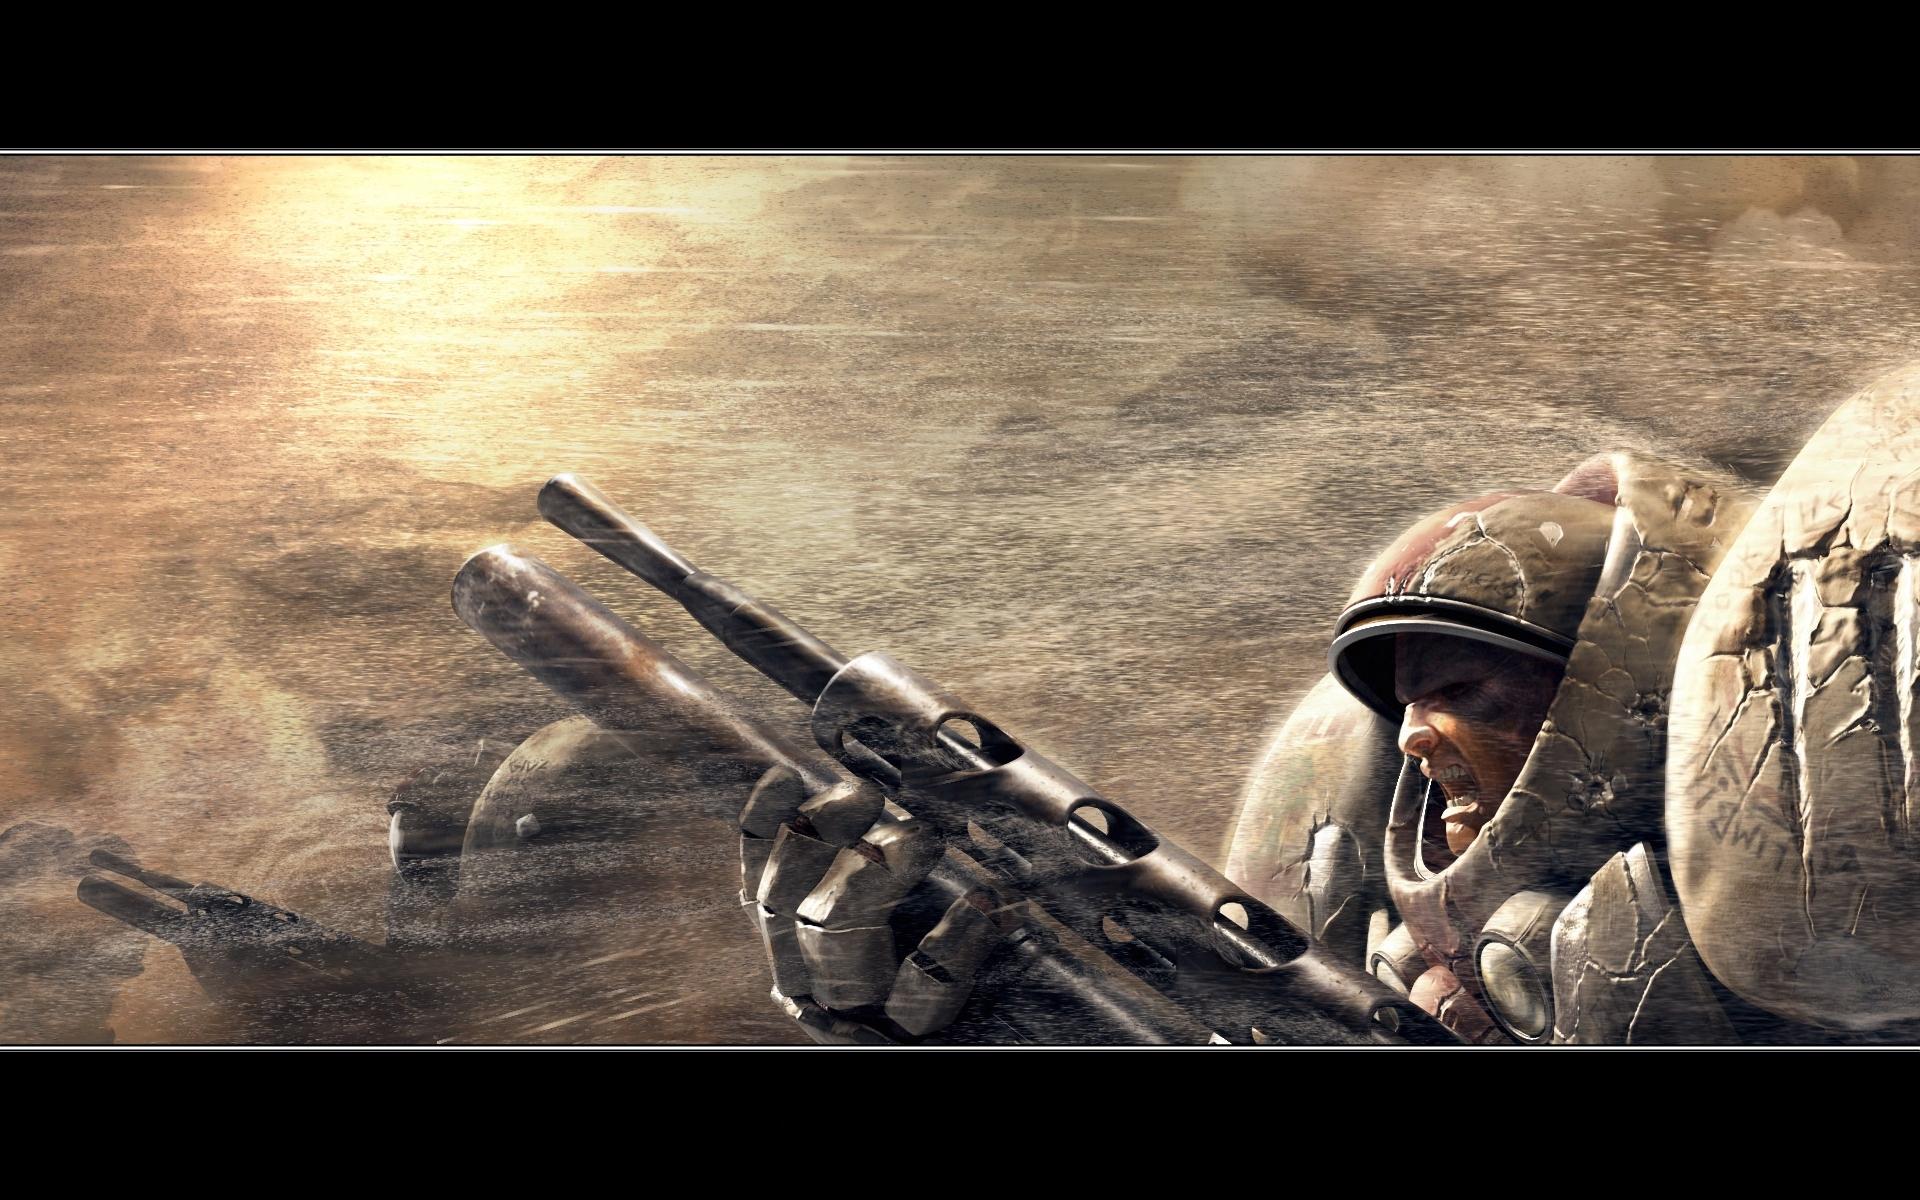 Sci Fi soldier featured in Starcraft II.